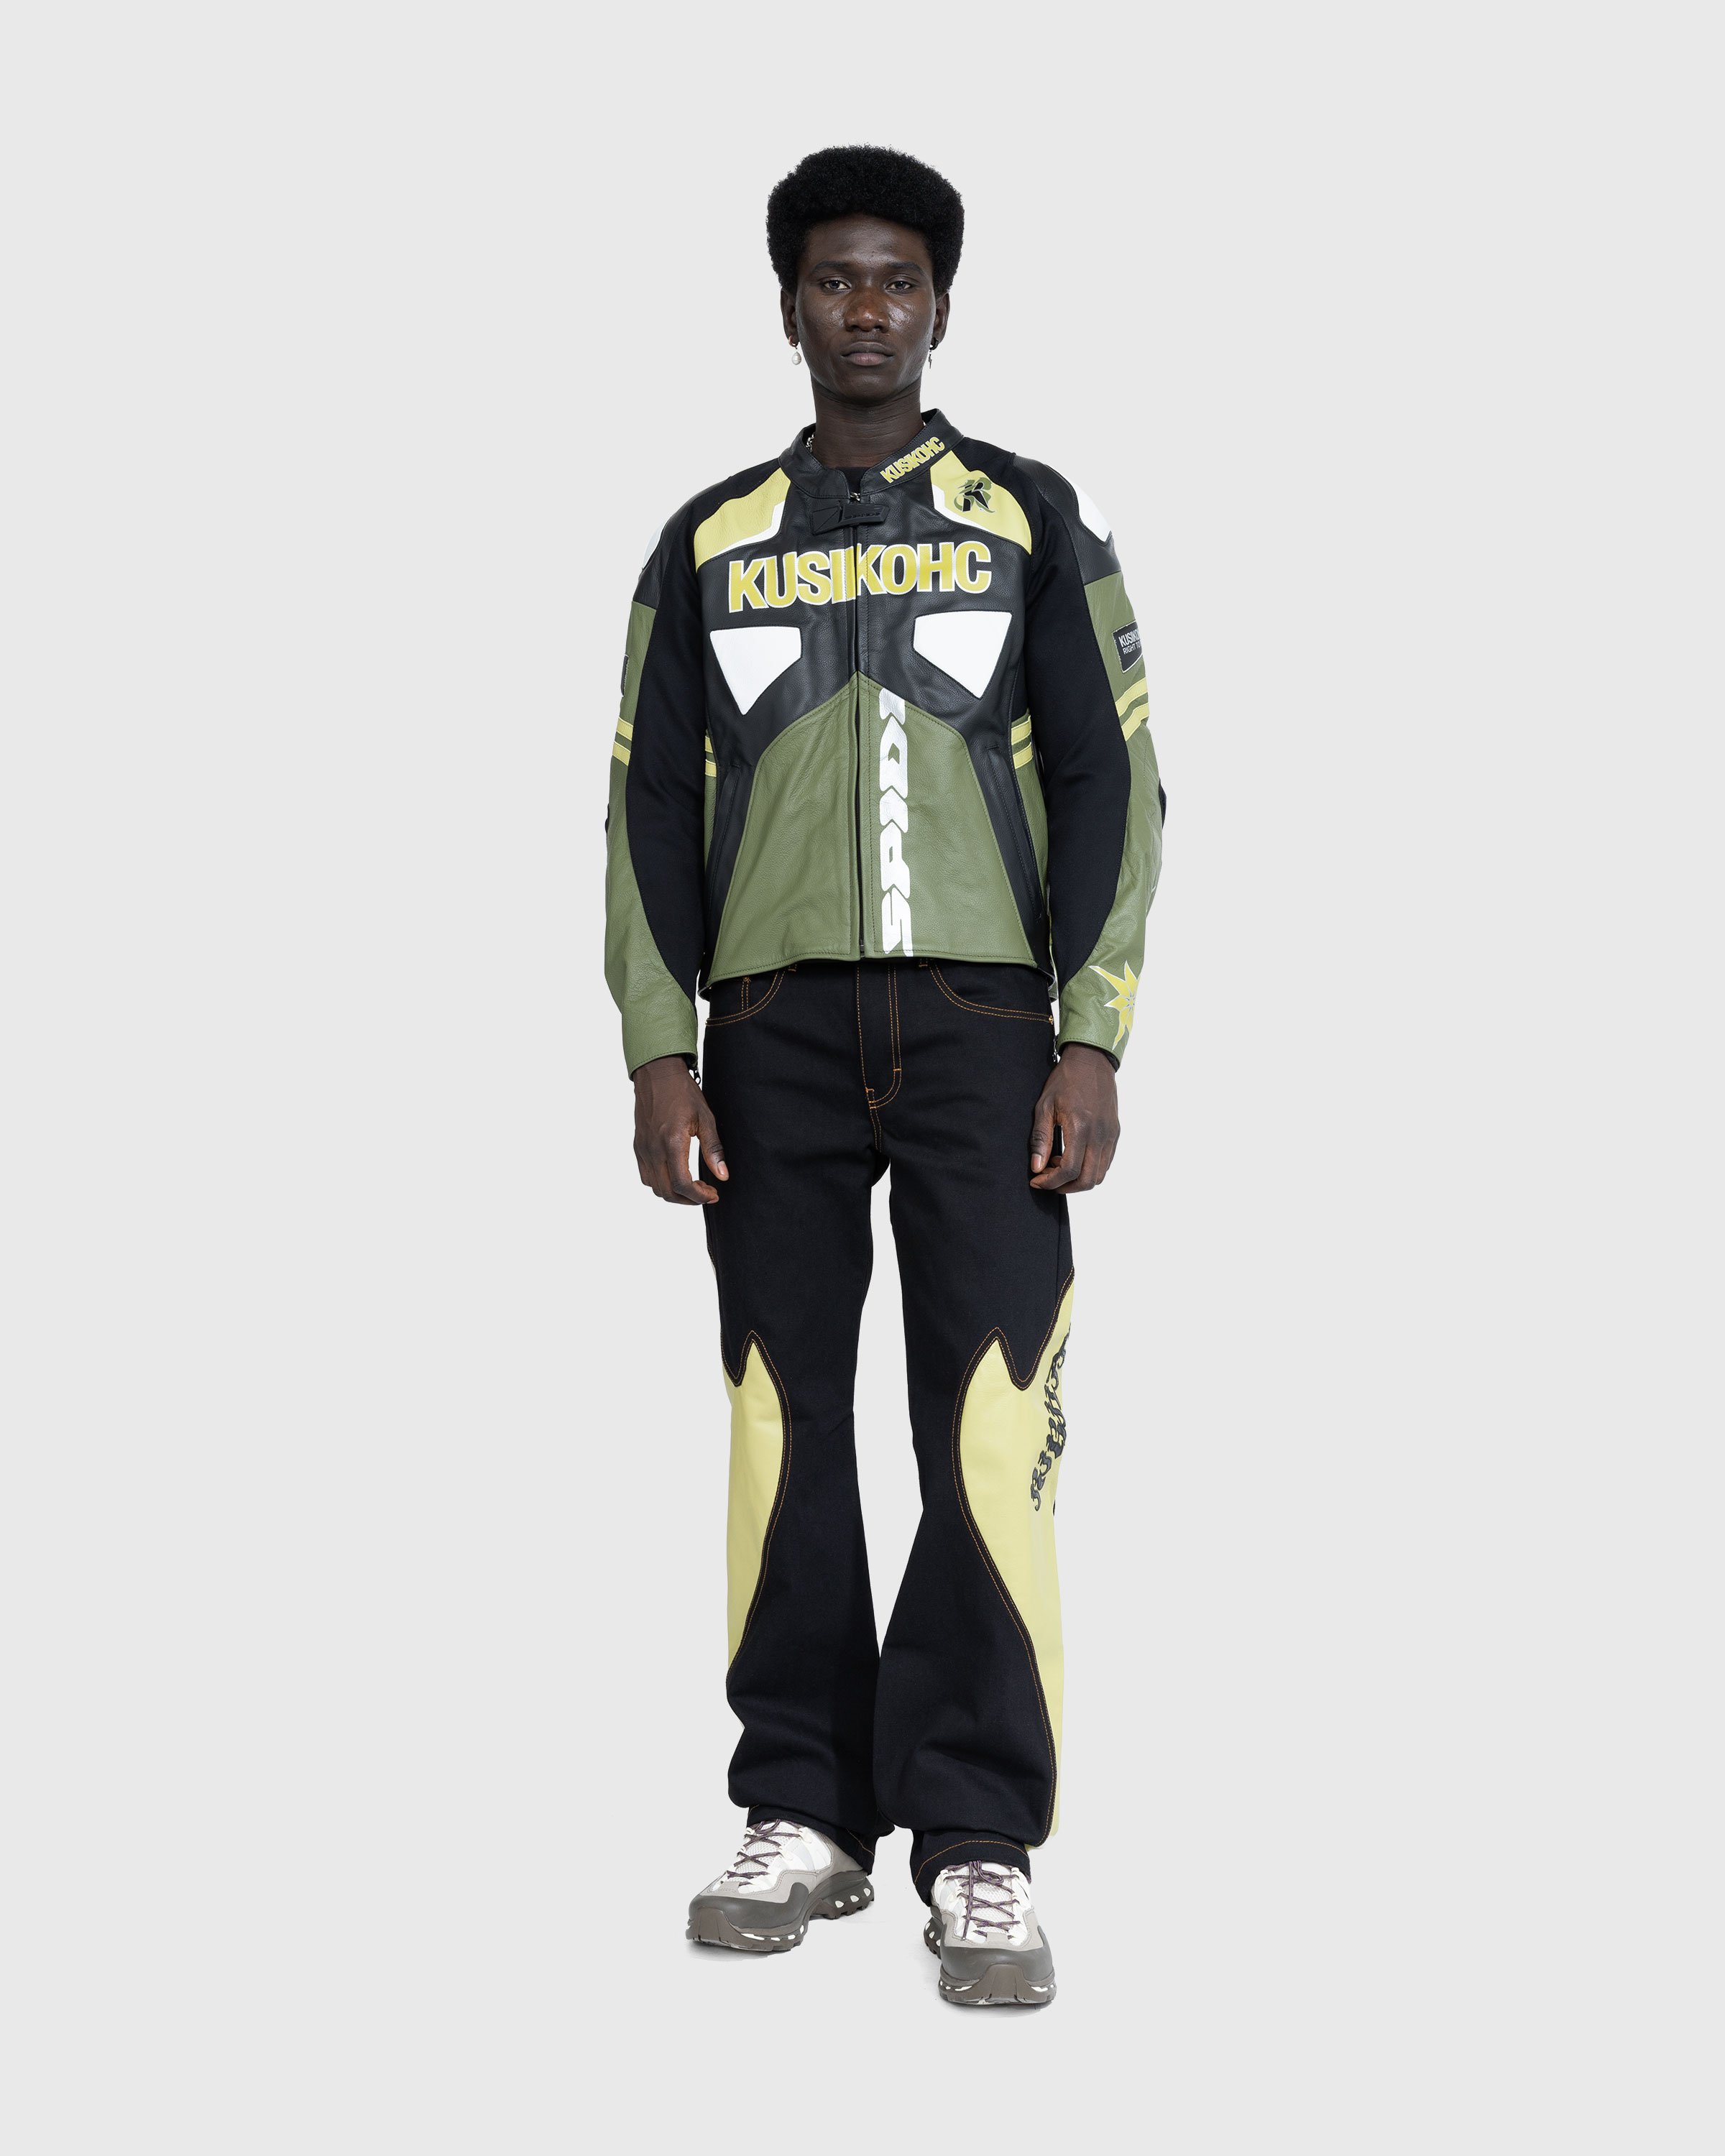 KUSIKOHC - Spidi Rider Jacket Black/Dark Green - Clothing - Multi - Image 4